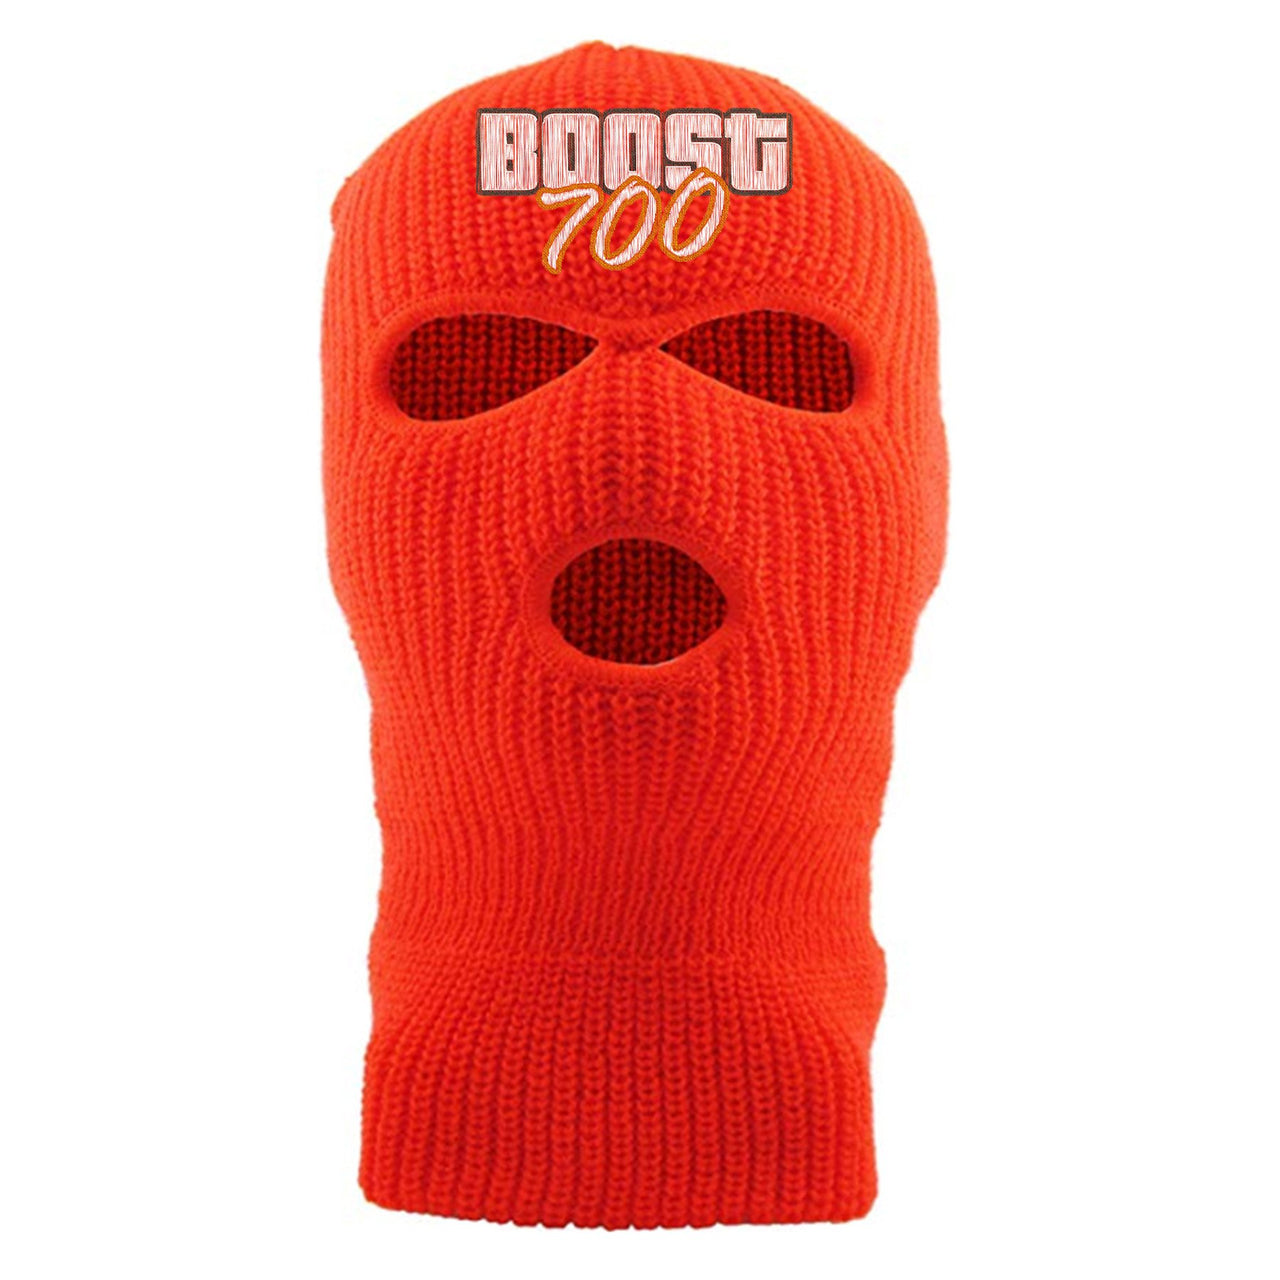 Magnet 700s Ski Mask | Video Game Cover, Lettering, Neon Orange